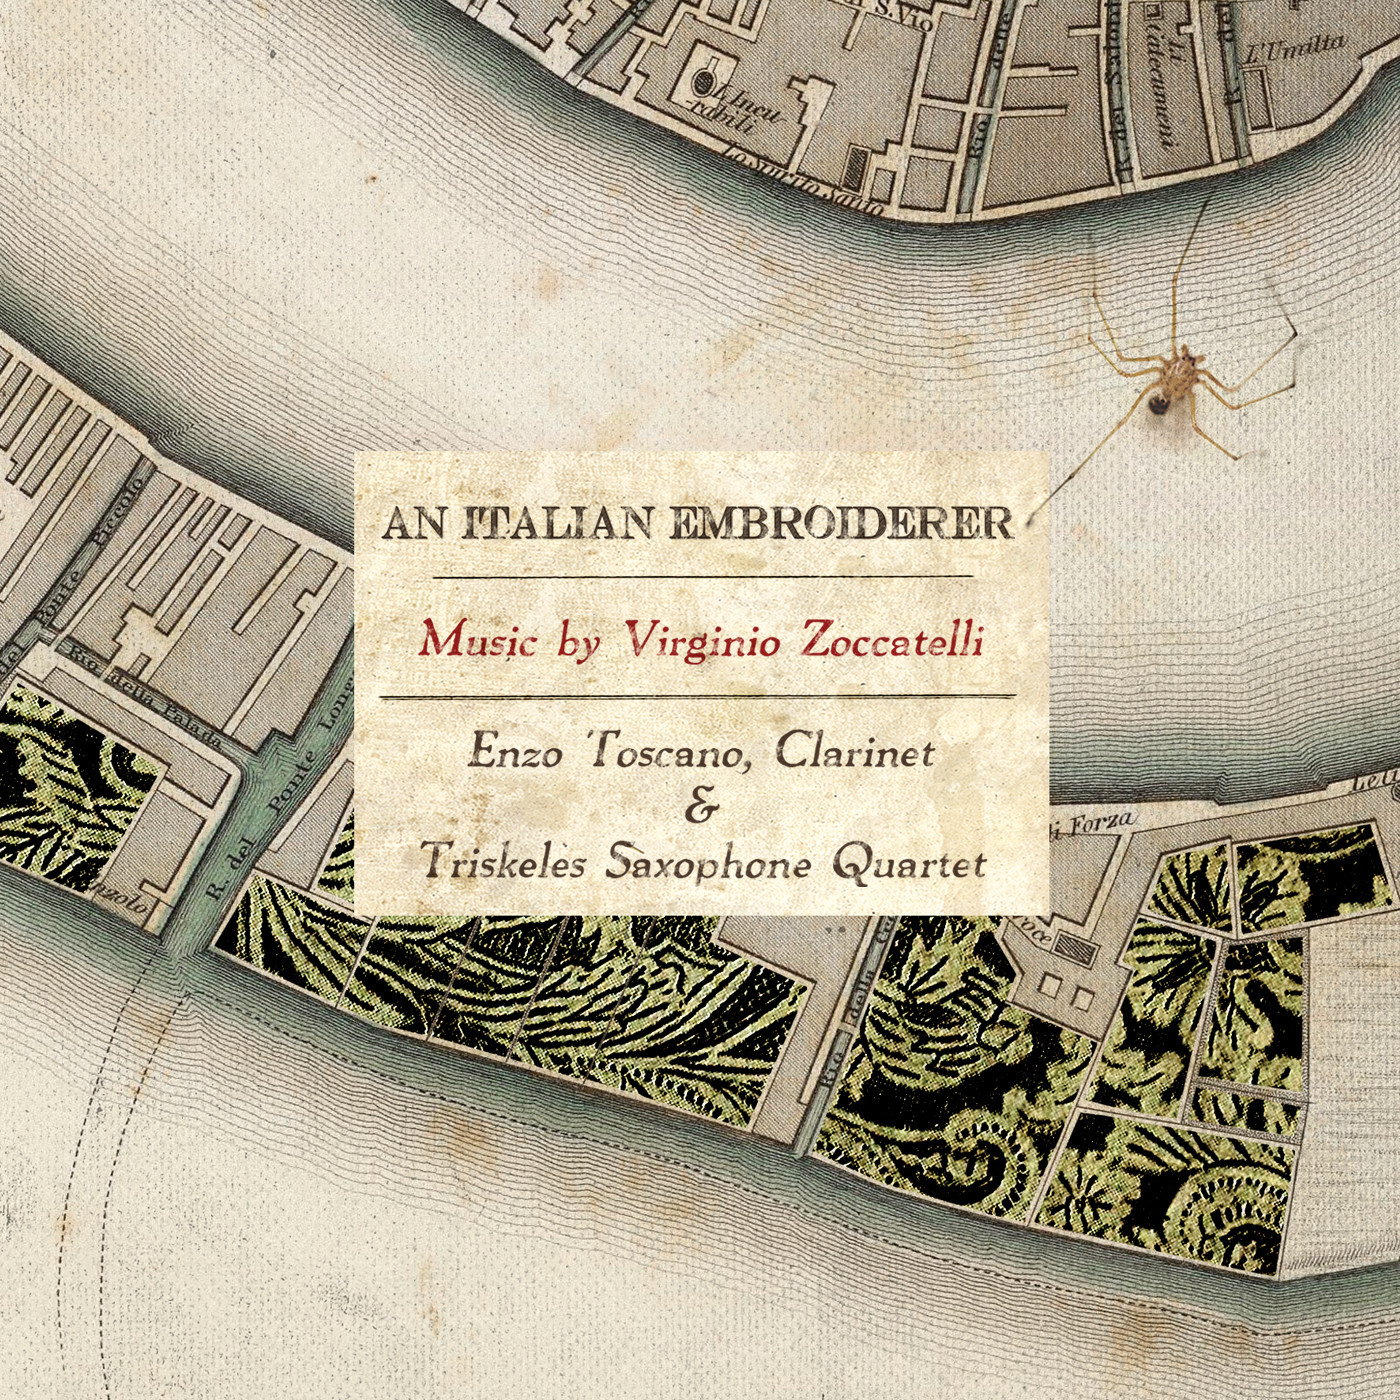 Virginio Zoccatelli, An Italian Embroiderer, Triskeles Saxophone Quartet, clarinet, album cover